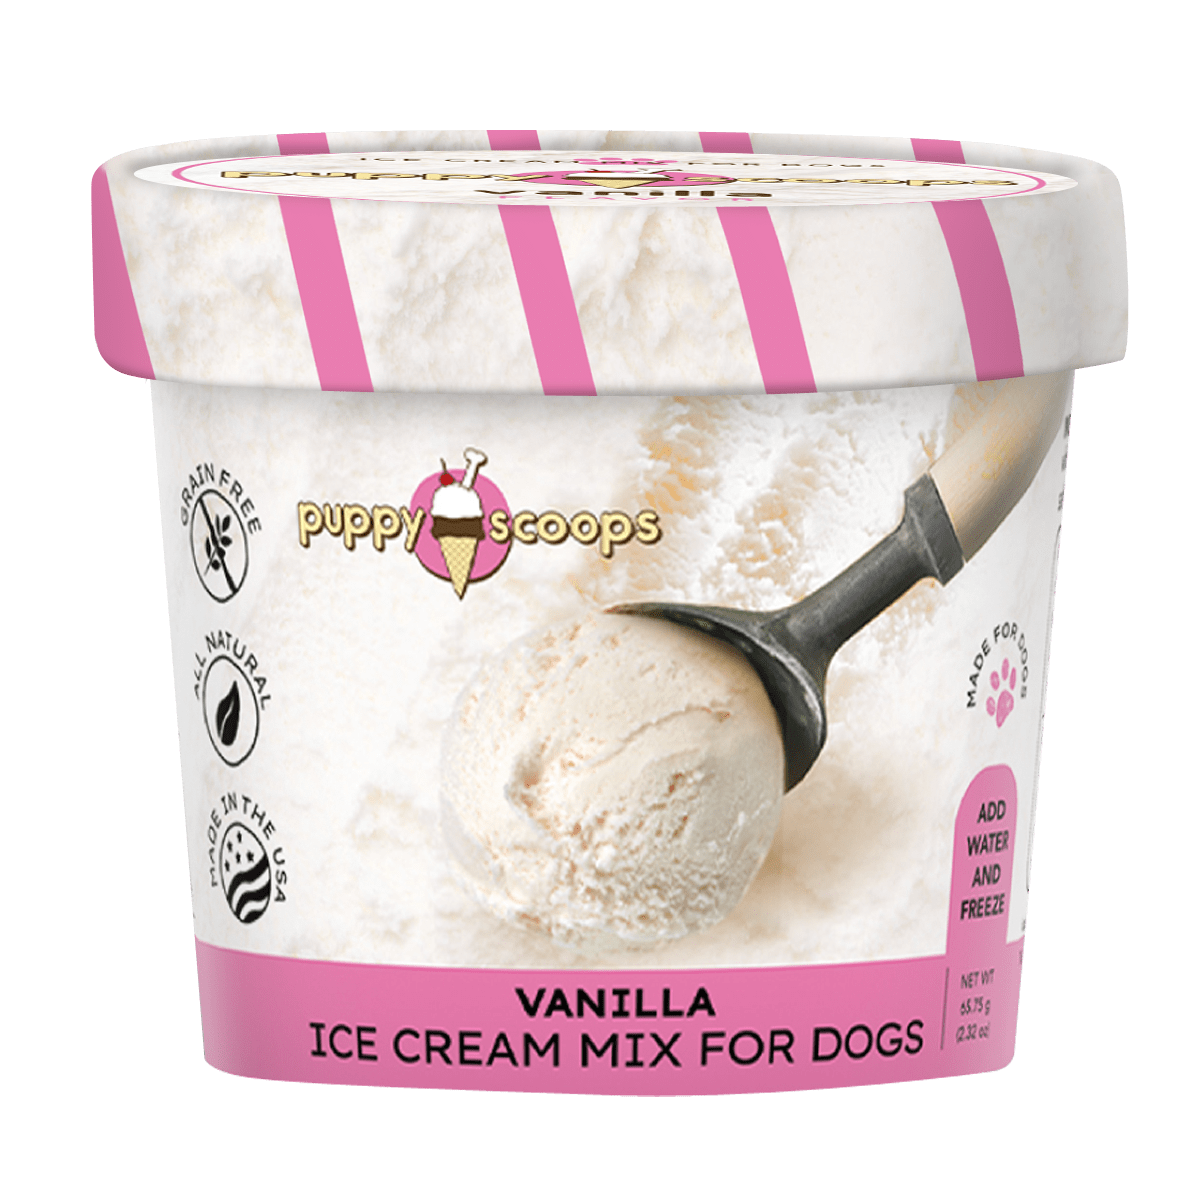 Puppy Scoops Ice Cream Mix - Vanilla, Cup Size, 2.32 oz